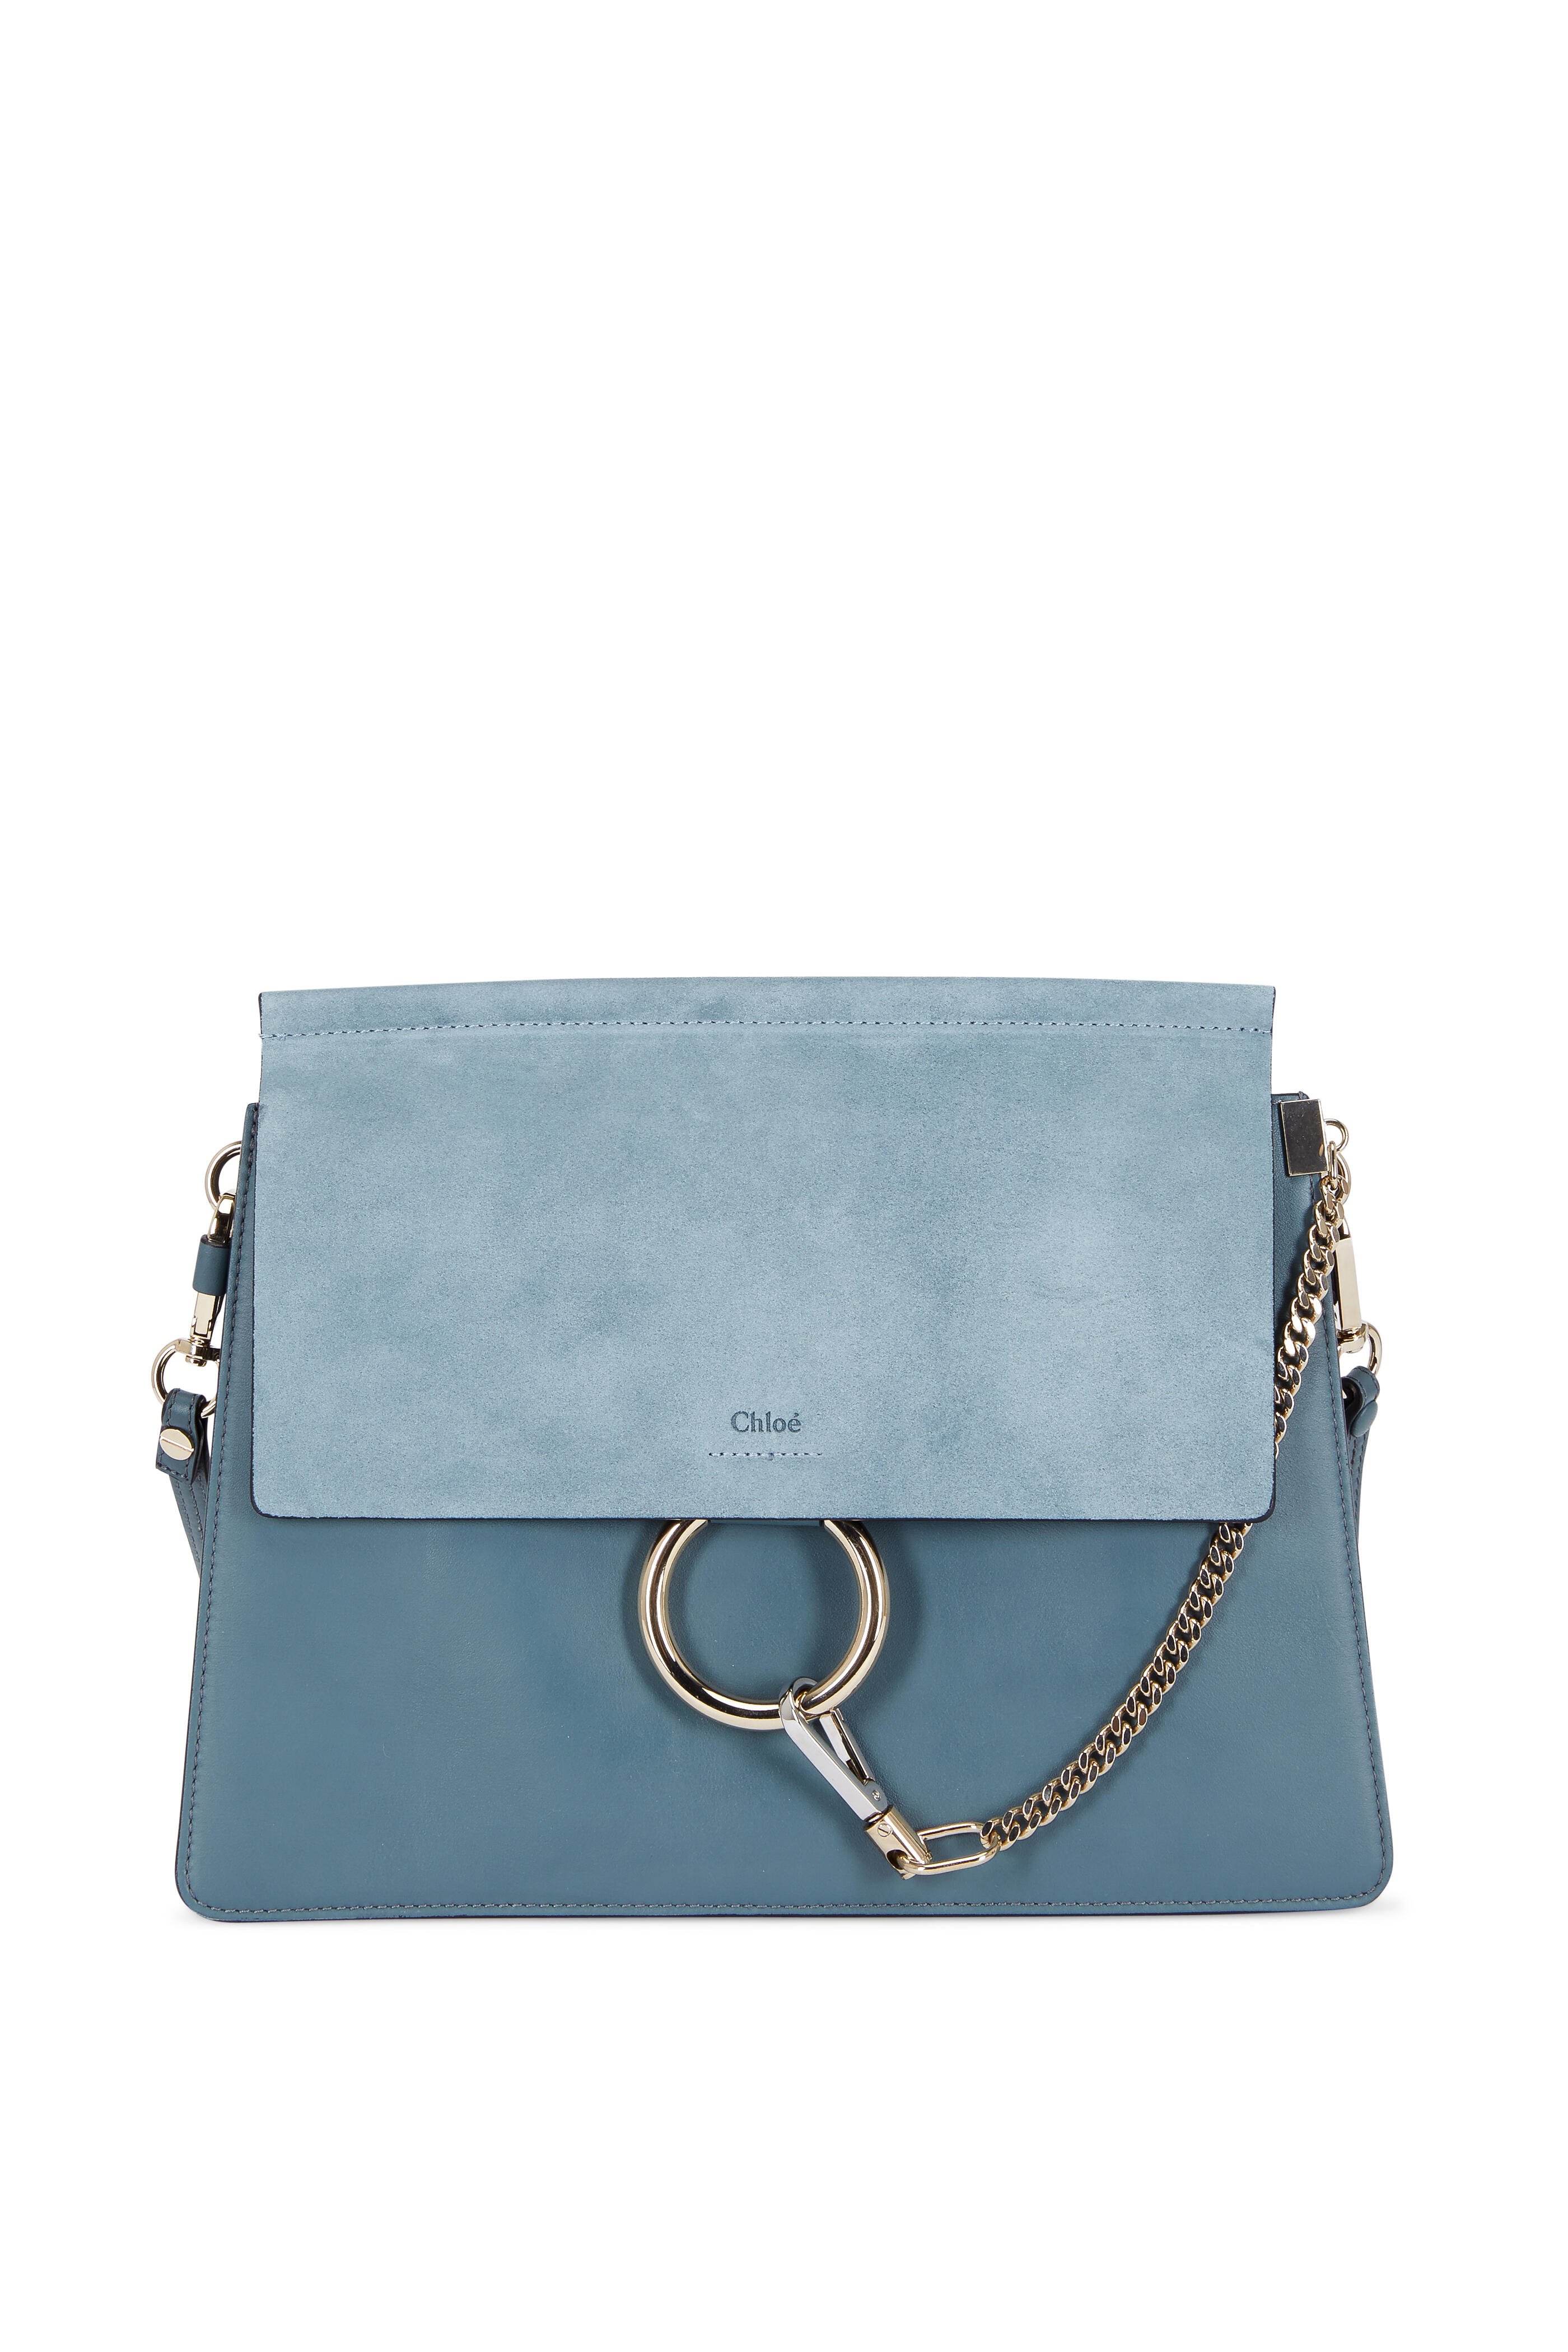 Chloé small Faye shoulder bag blue